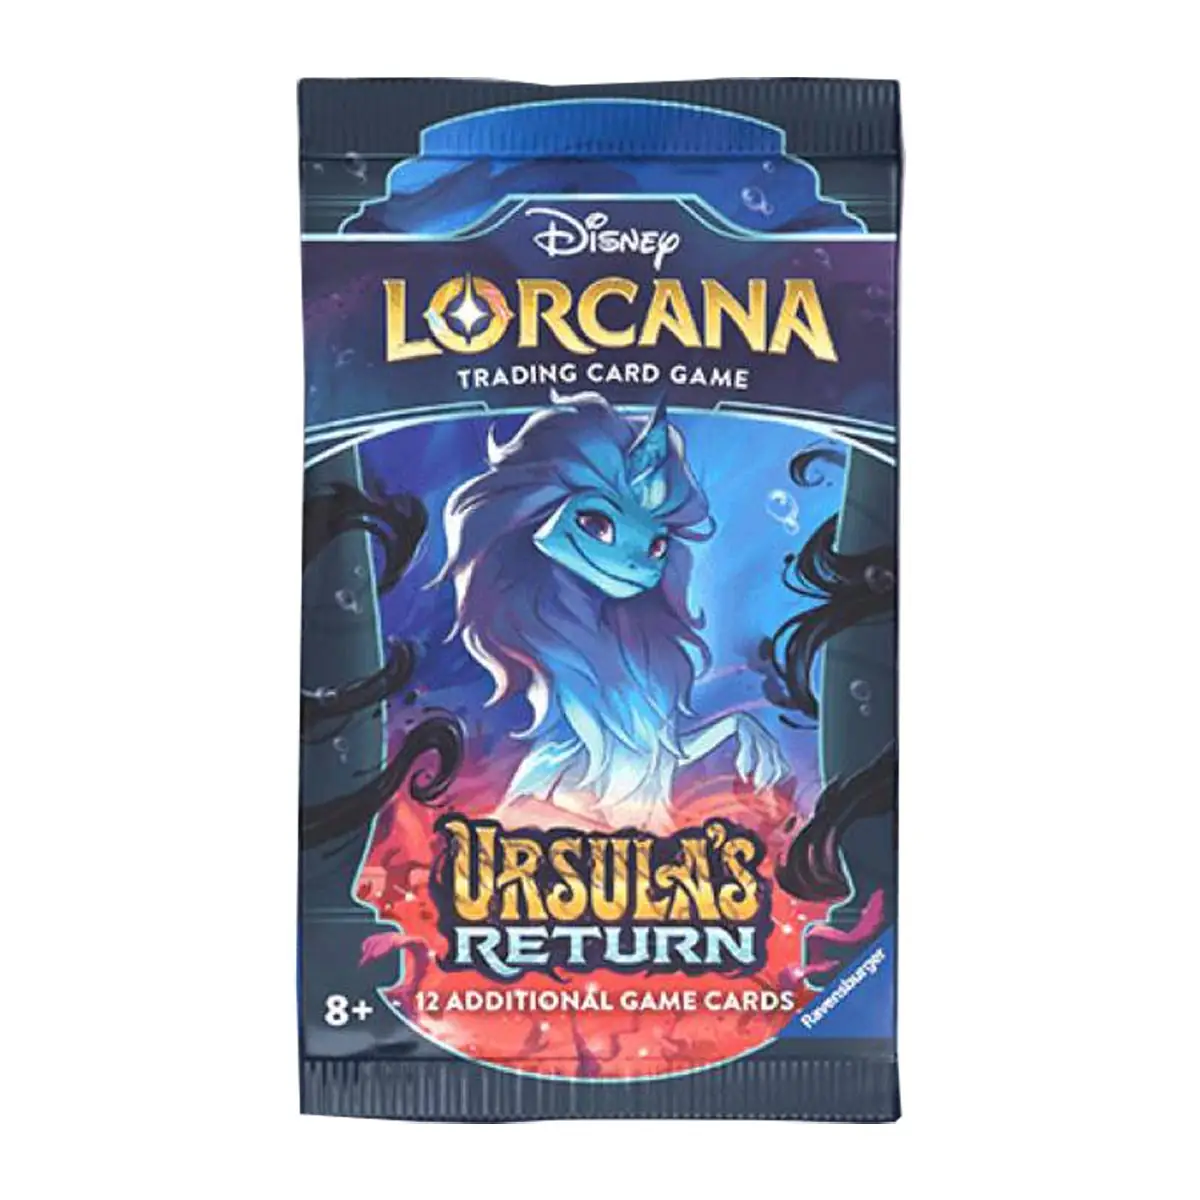 Disney Lorcana Trading Card Game Set 4 - Ursula's Return - Booster Pack - 0